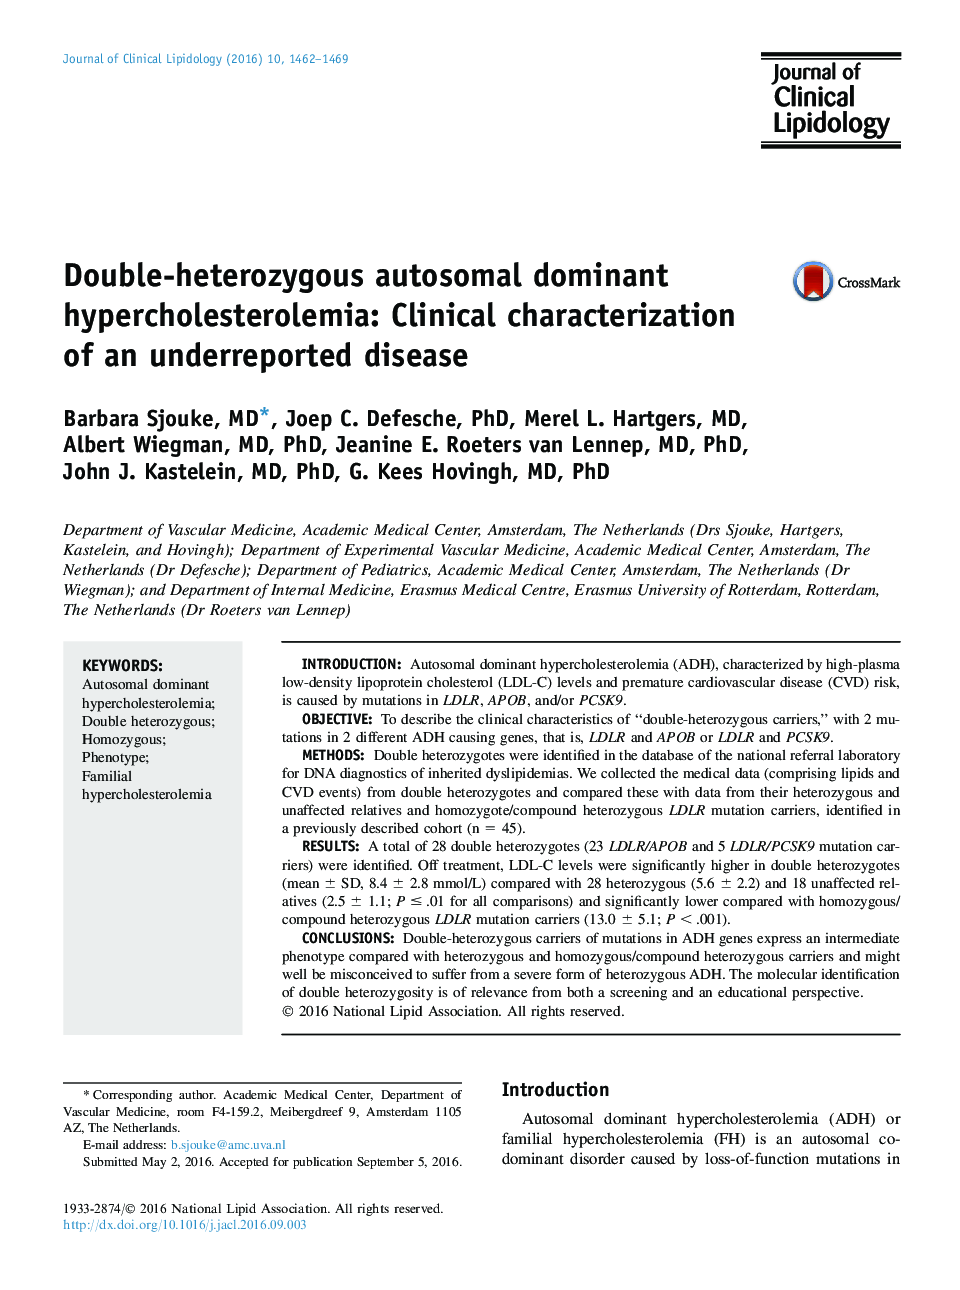 Double-heterozygous autosomal dominant hypercholesterolemia: Clinical characterization of an underreported disease